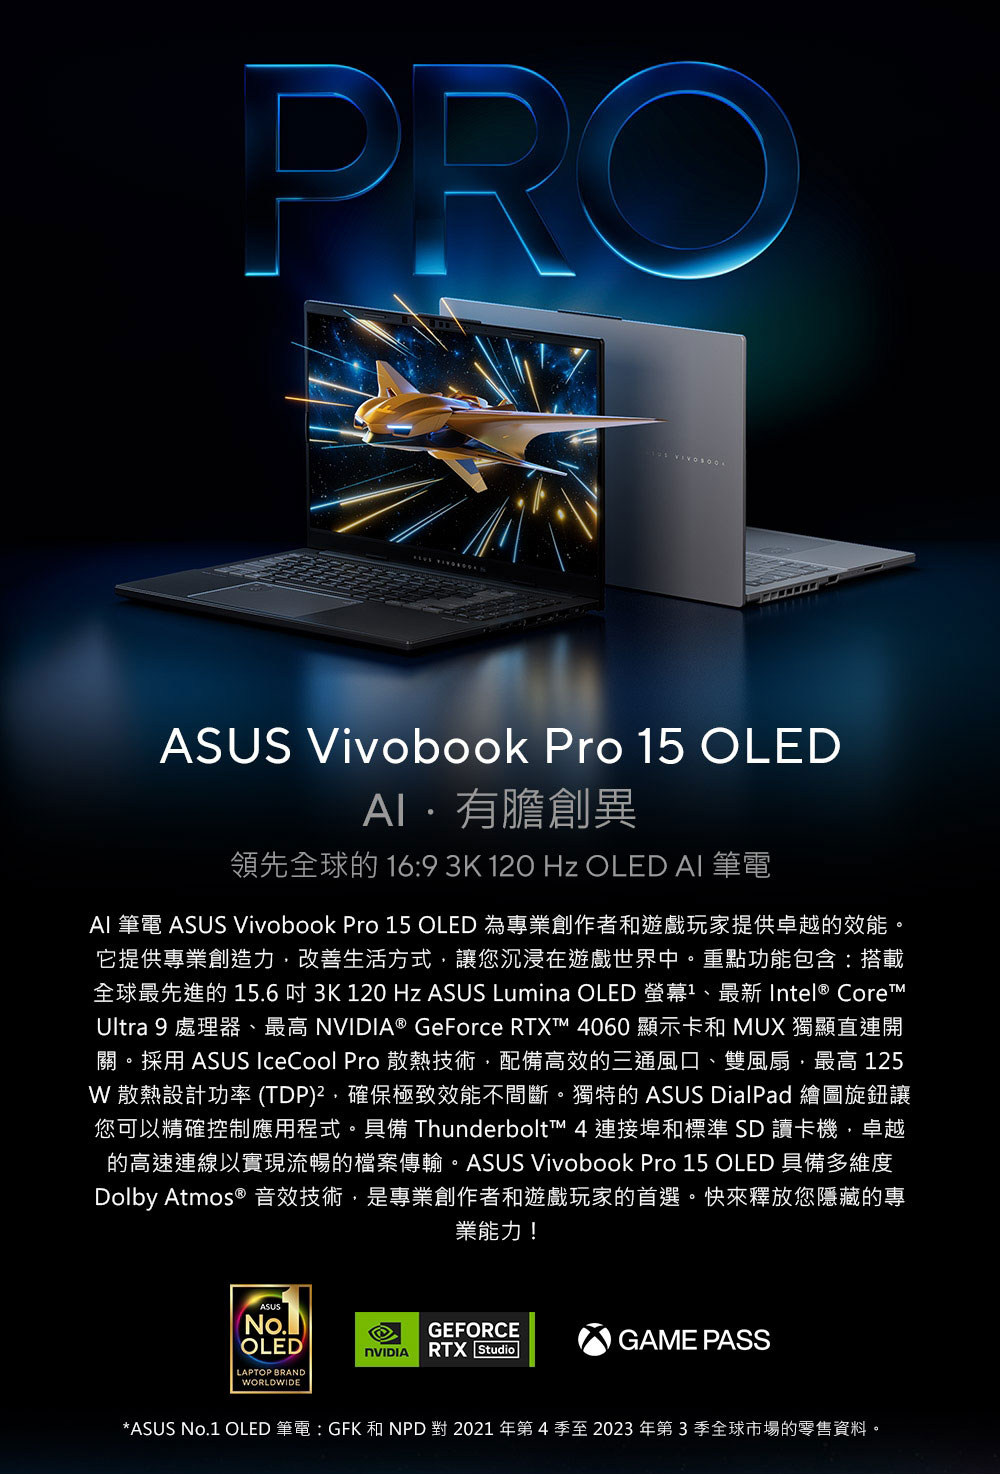 ASUS 華碩 特仕版 15.6吋輕薄筆電(Vivobook